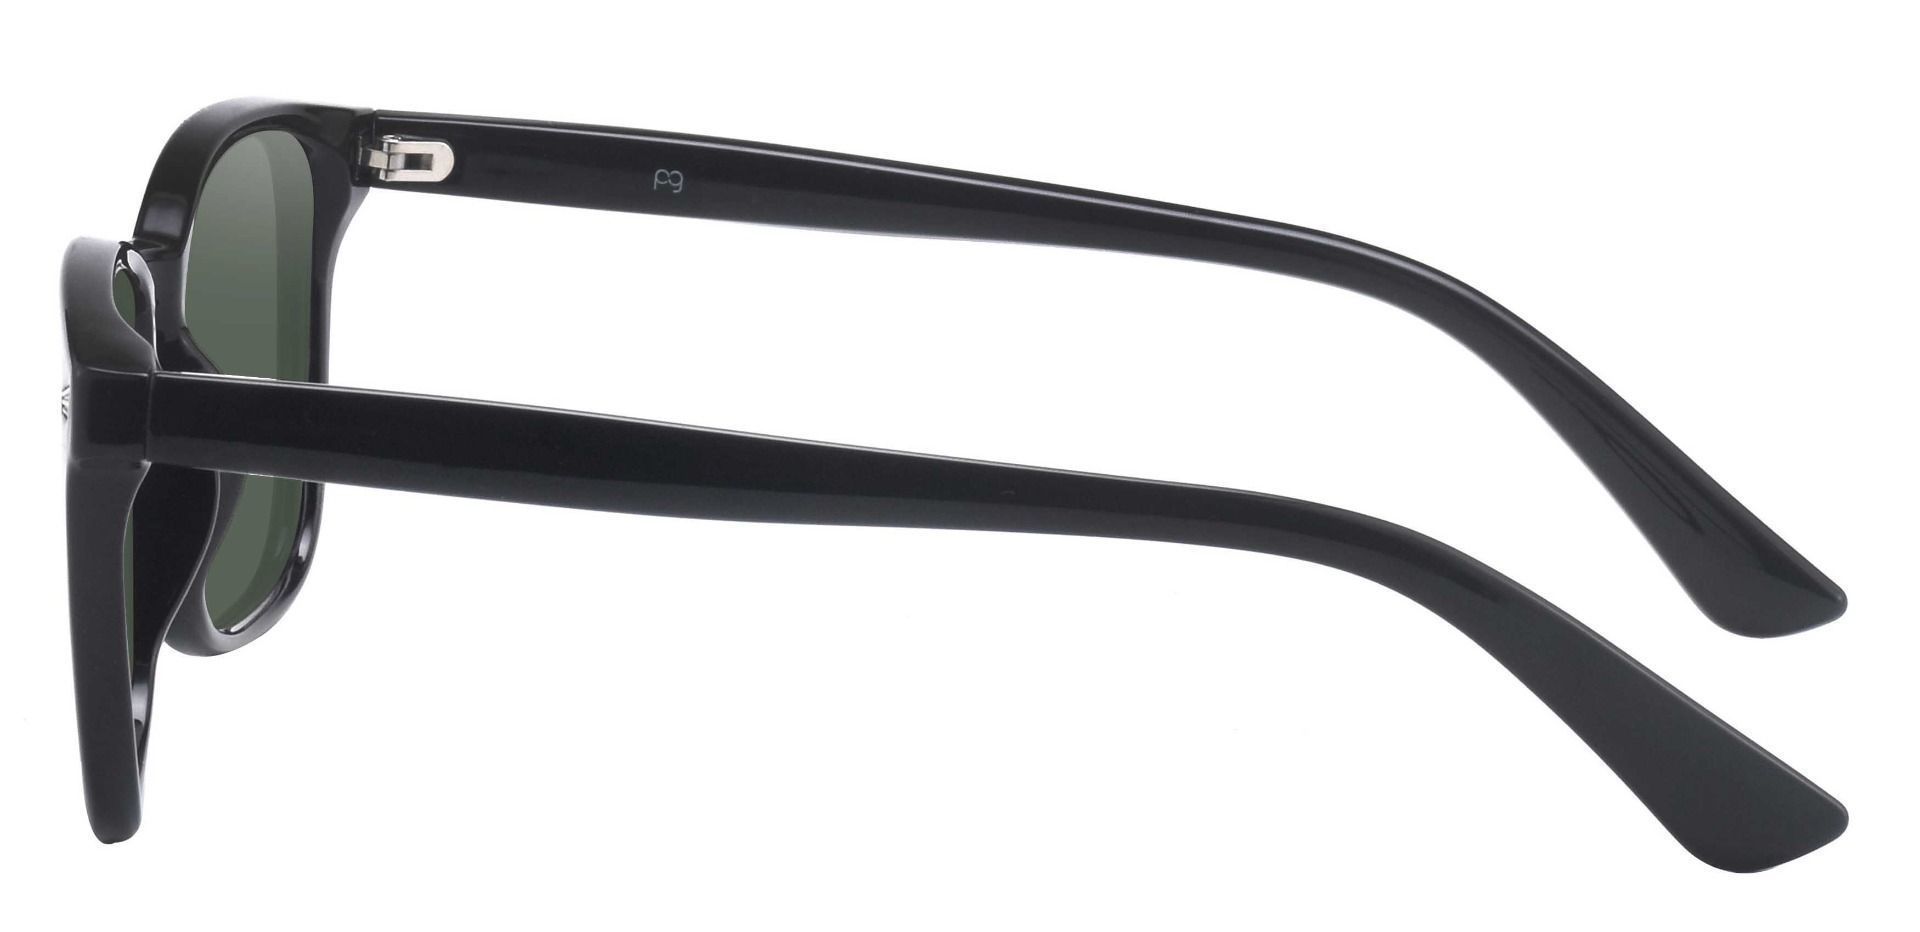 Rogan Square Prescription Sunglasses - Black Frame With Green Lenses